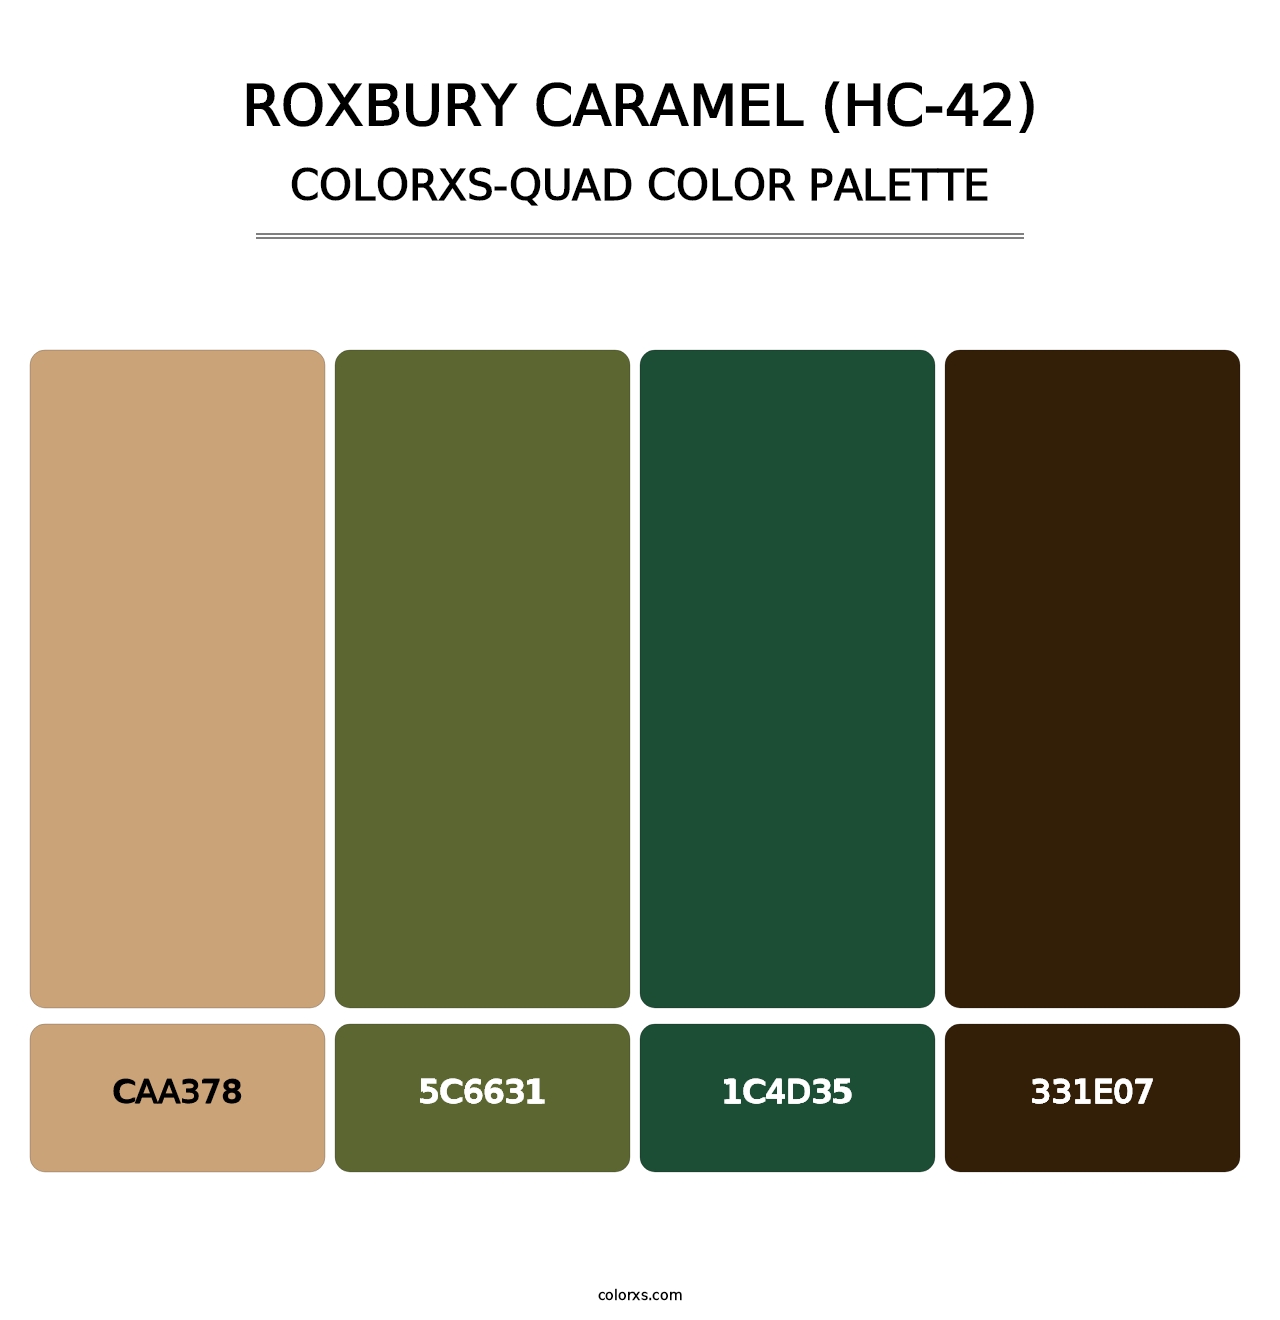 Roxbury Caramel (HC-42) - Colorxs Quad Palette